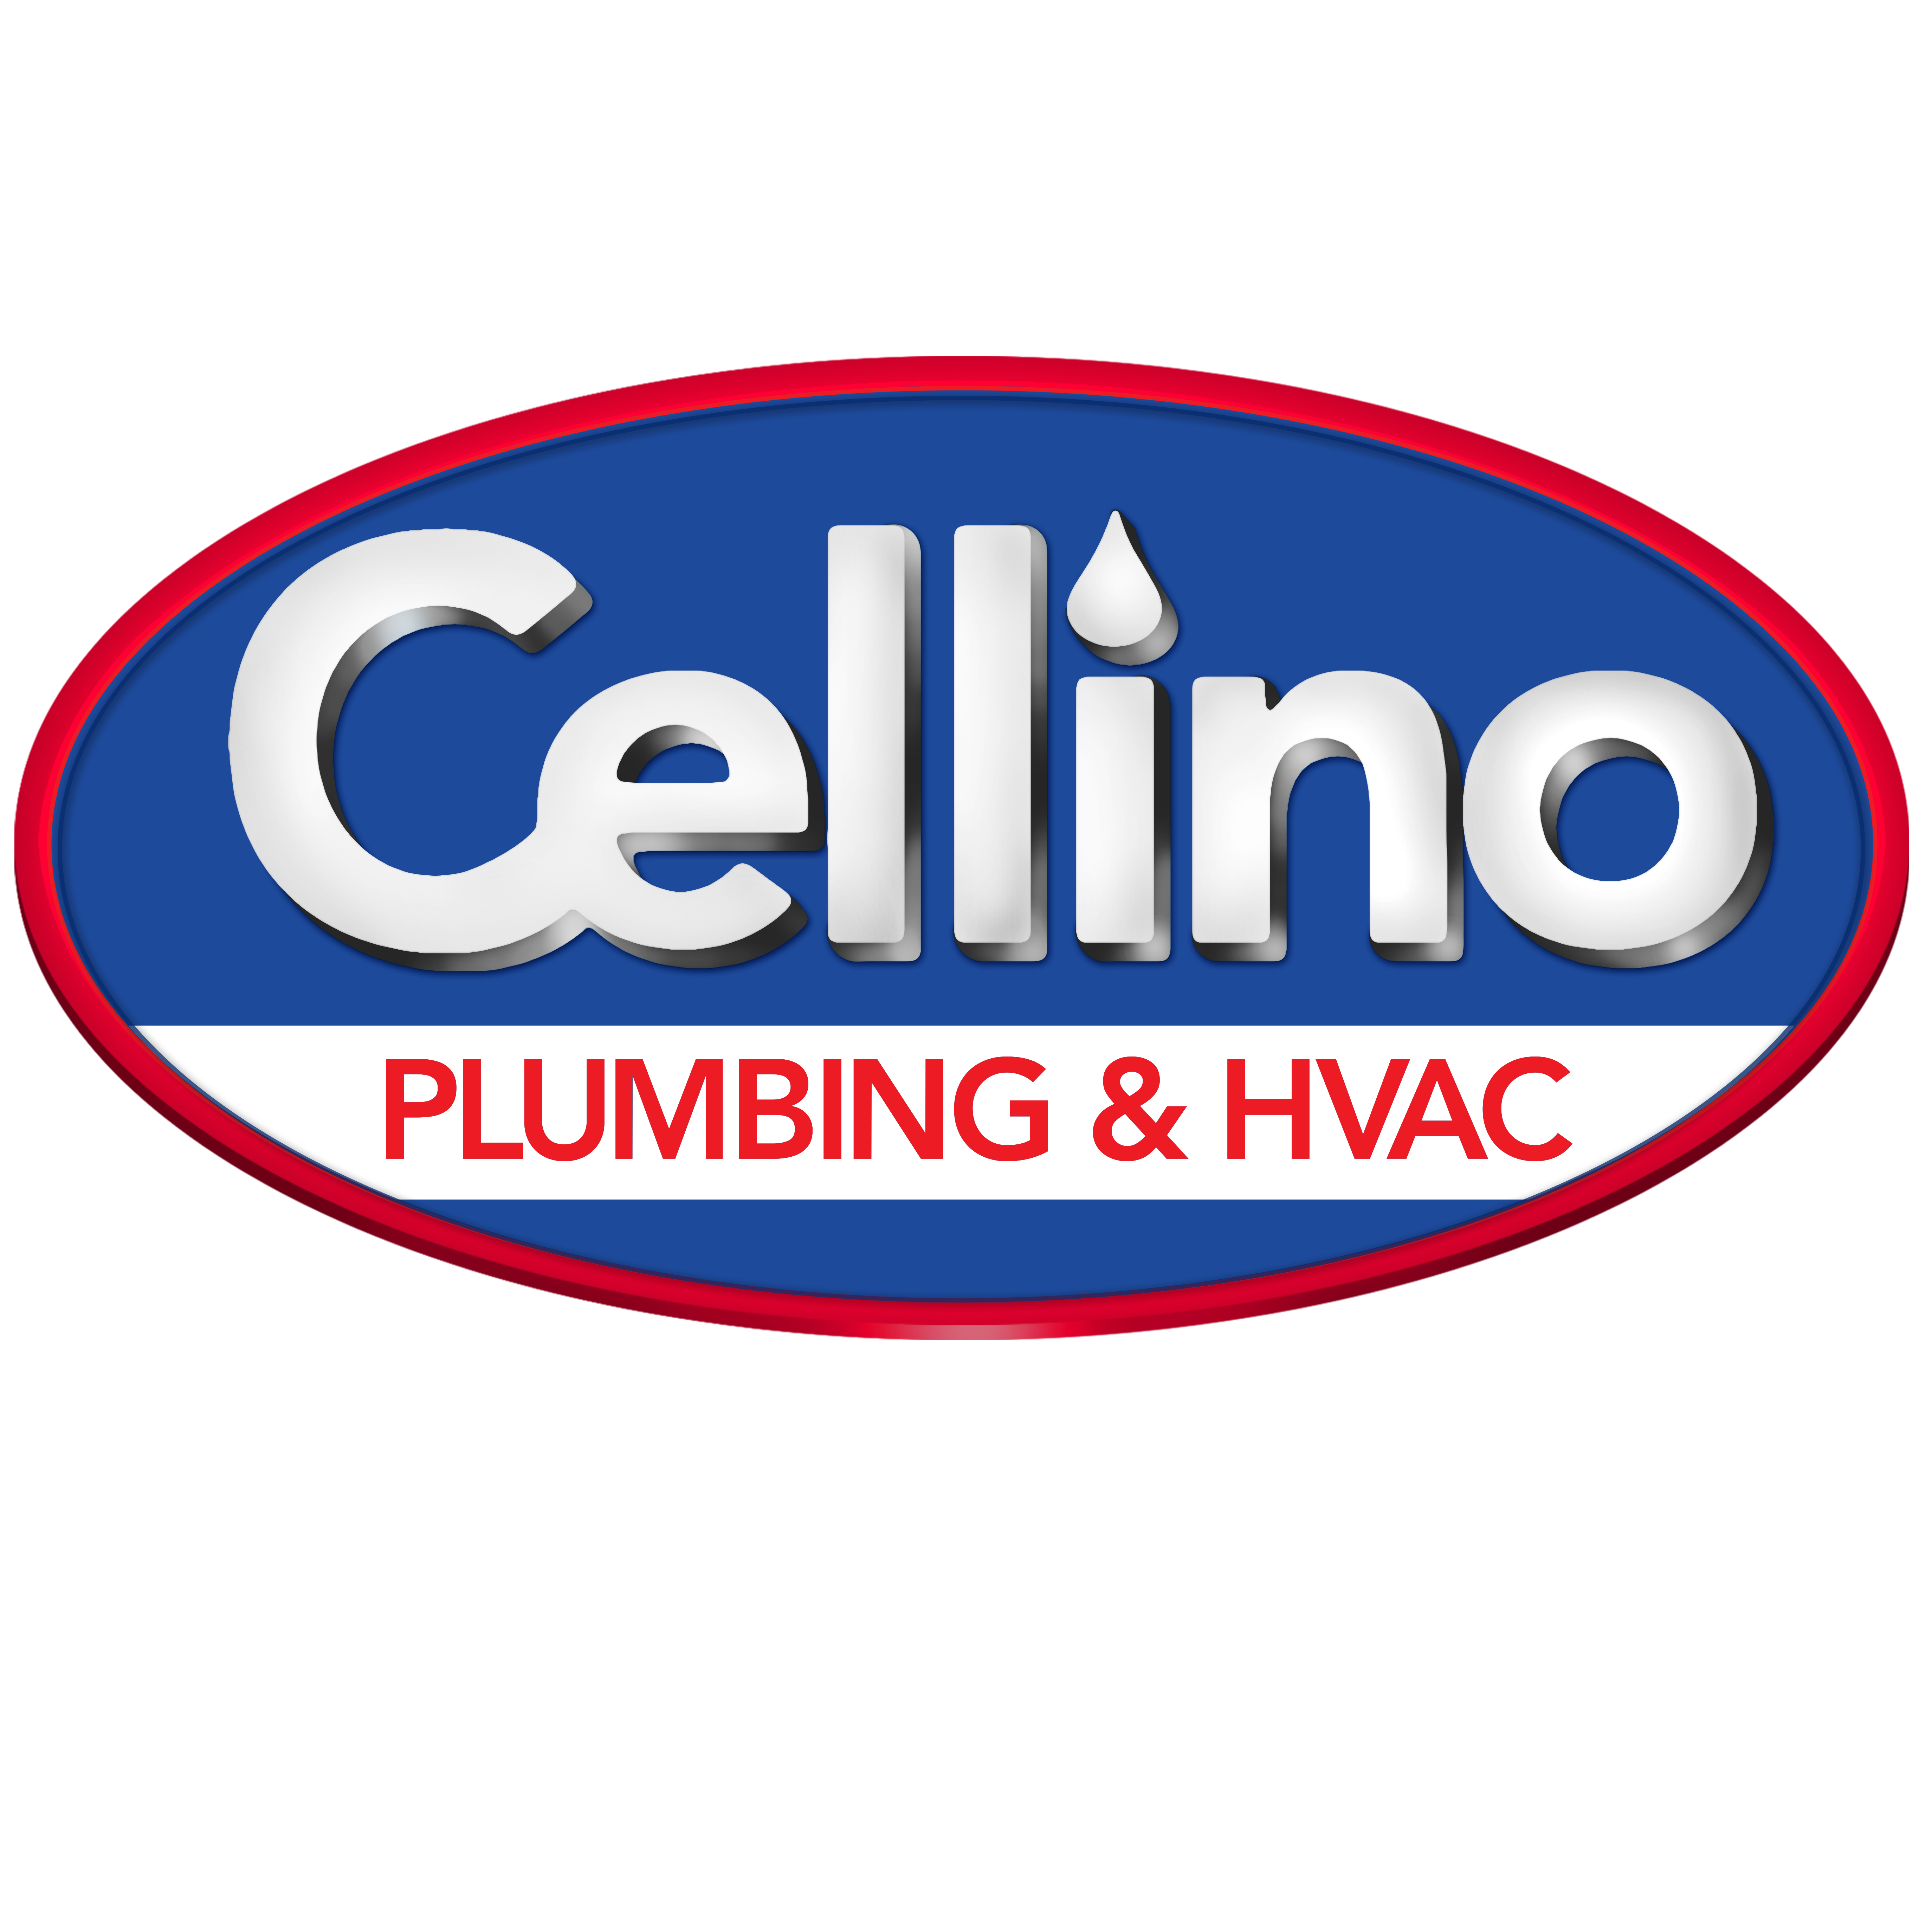 Cellino Plumbing, Heating & Cooling - Buffalo, NY 14219 - (716)822-7551 | ShowMeLocal.com